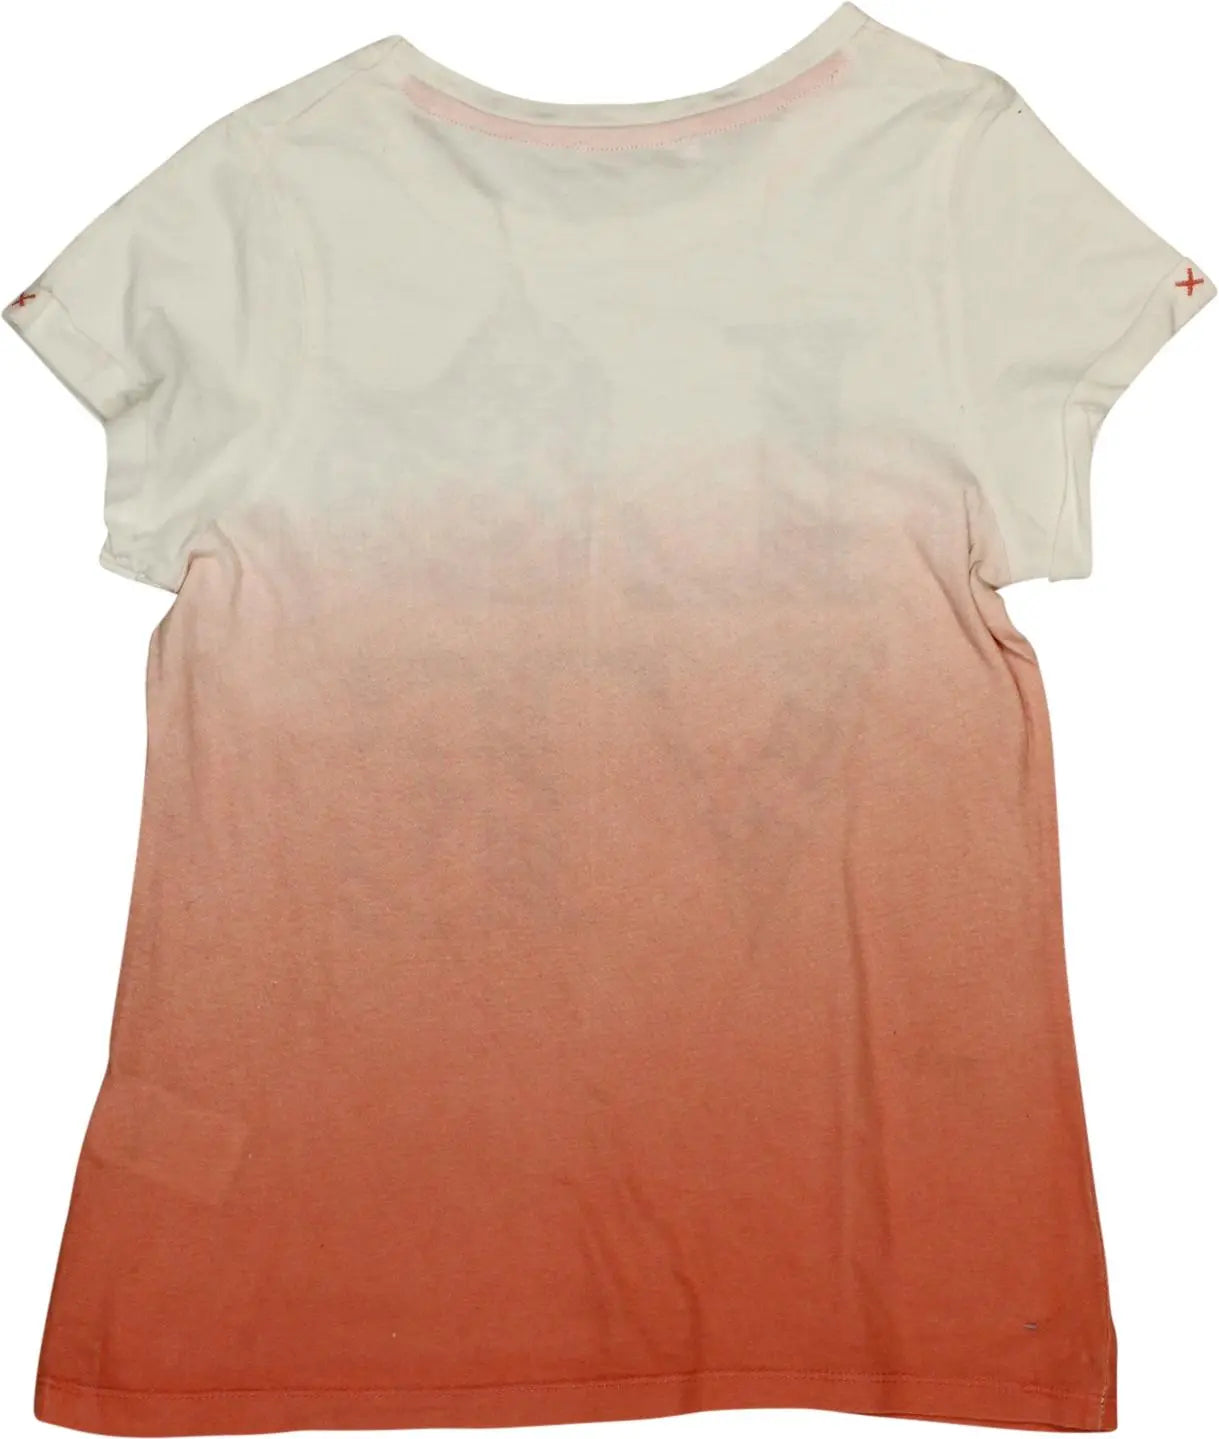 Charles Vögele - Pink T-shirt- ThriftTale.com - Vintage and second handclothing